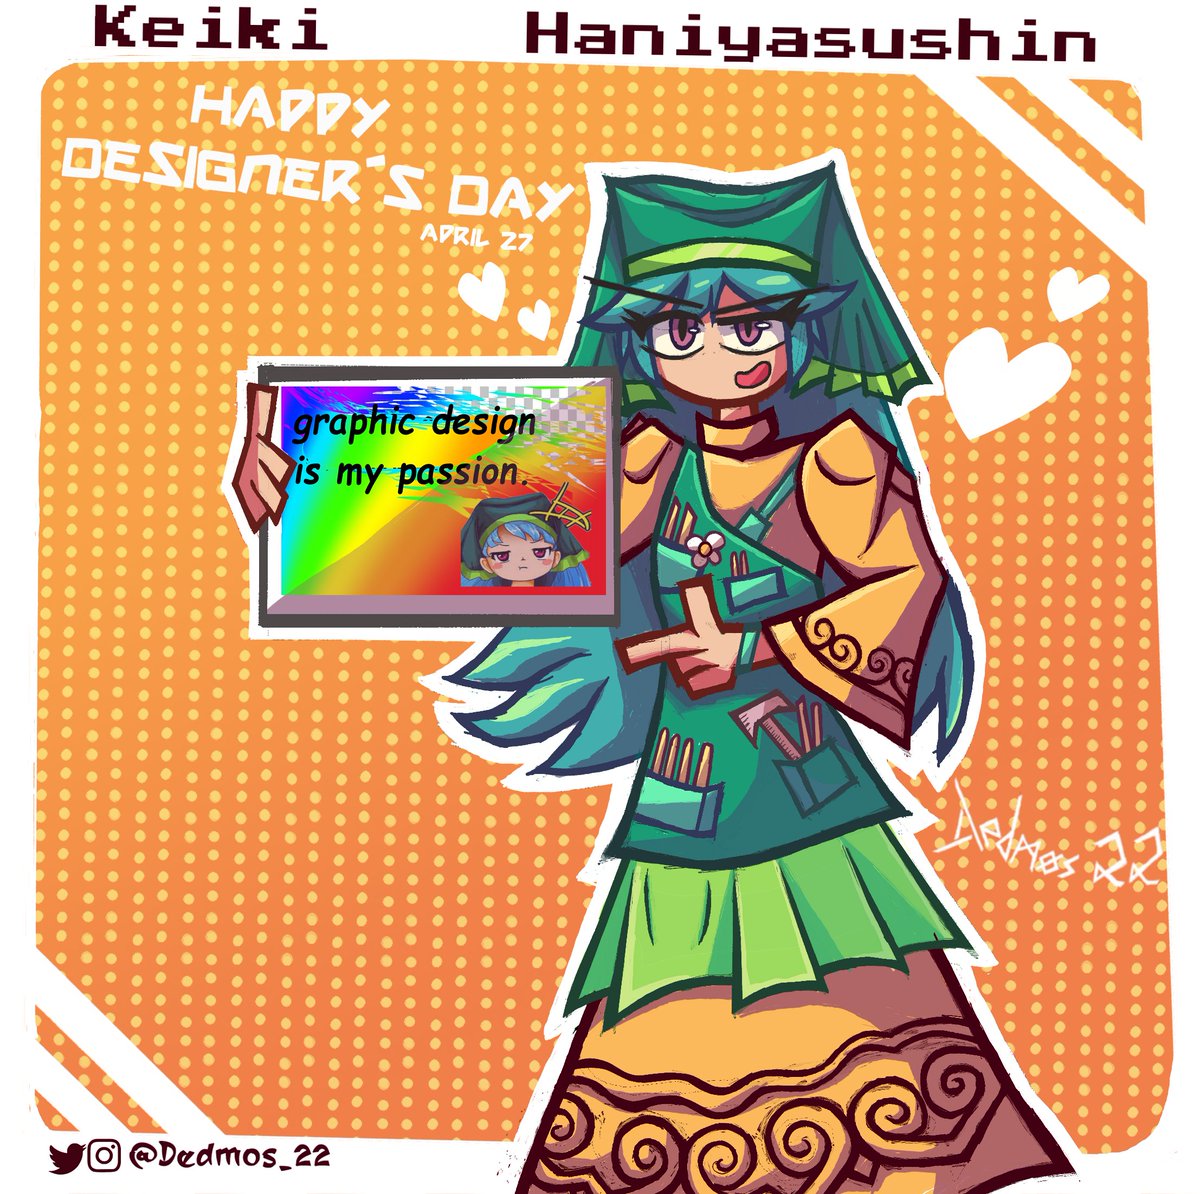 Keiki wishes you a happy designer day XD \(>w<)/
#designersdays #diadeldsieñador #touhoufanart #touhou #keikihaniyasushin #keikitouhou #touhou17